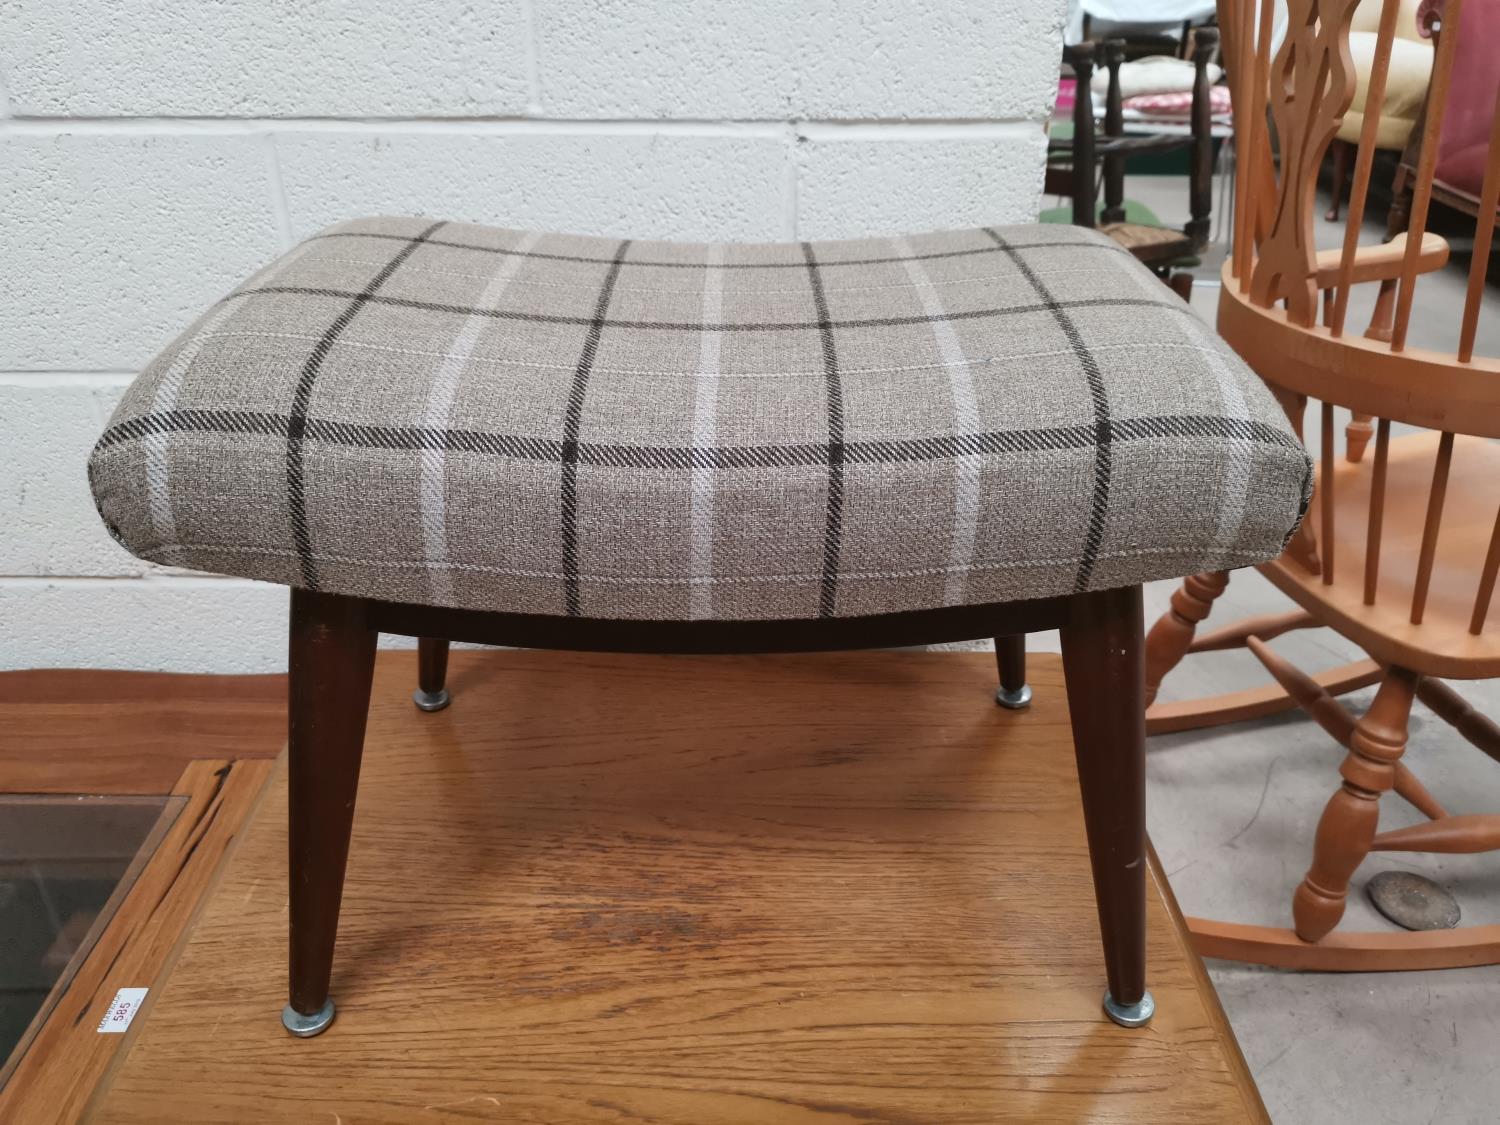 A teak retro stool upholstered in tartan fabric